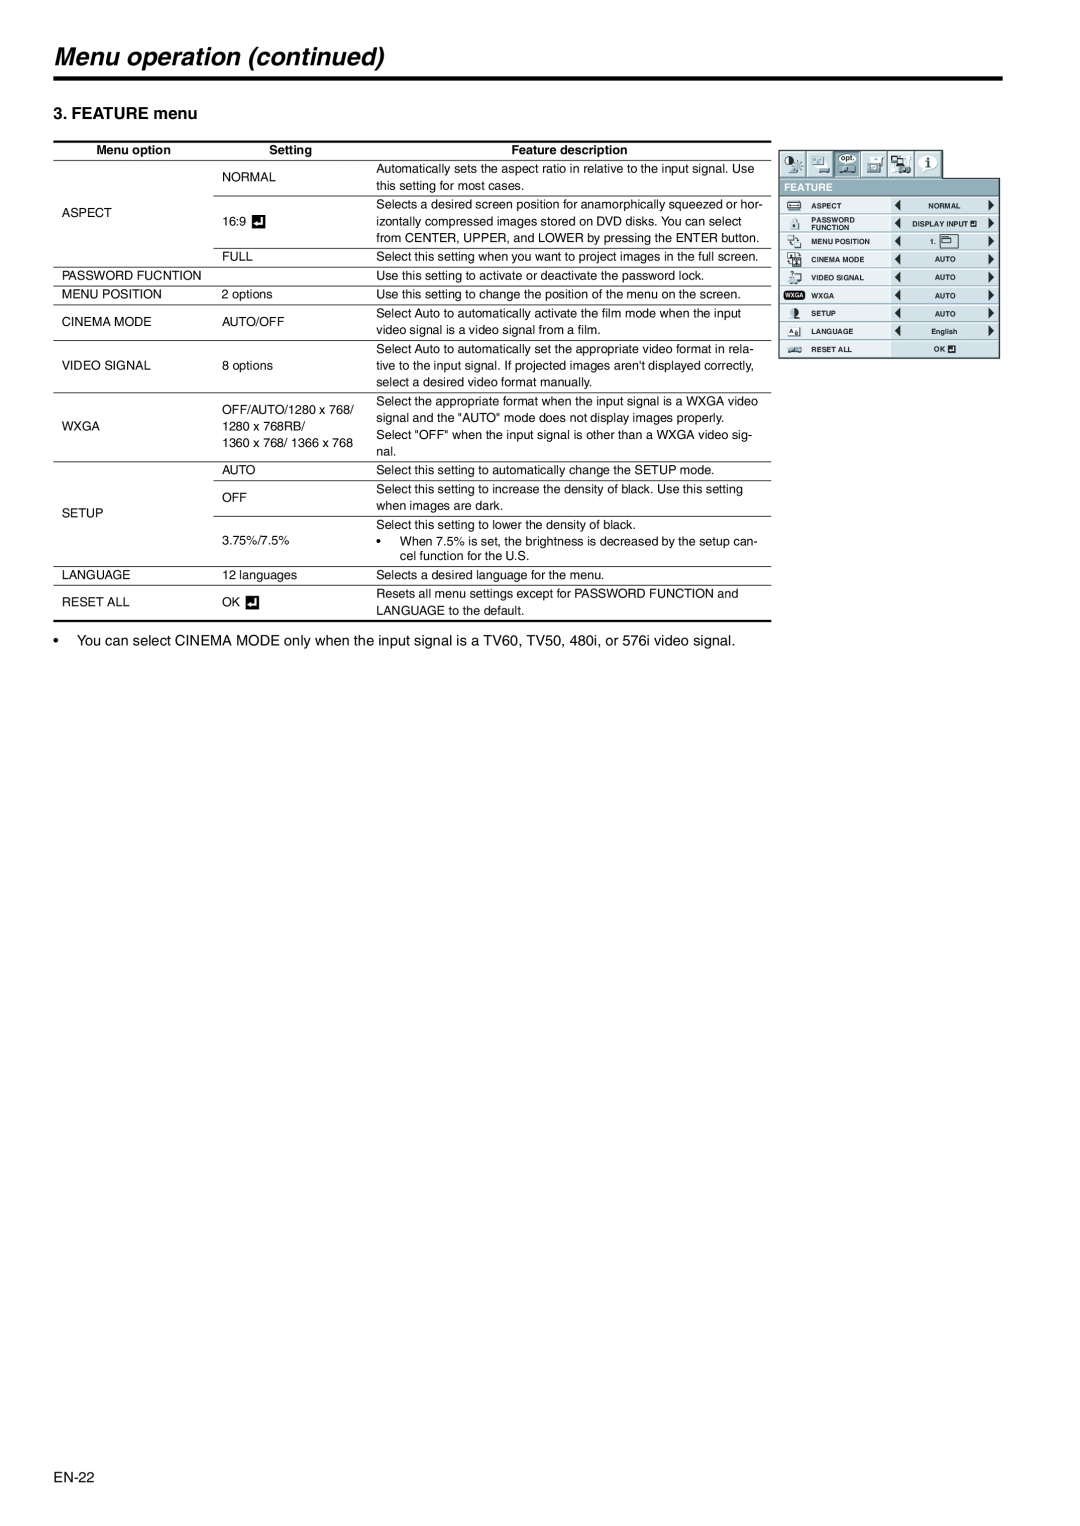 Mitsubishi Electronics XD280U-G FEATURE menu, Menu operation continued, Menu option, Setting, Feature description 